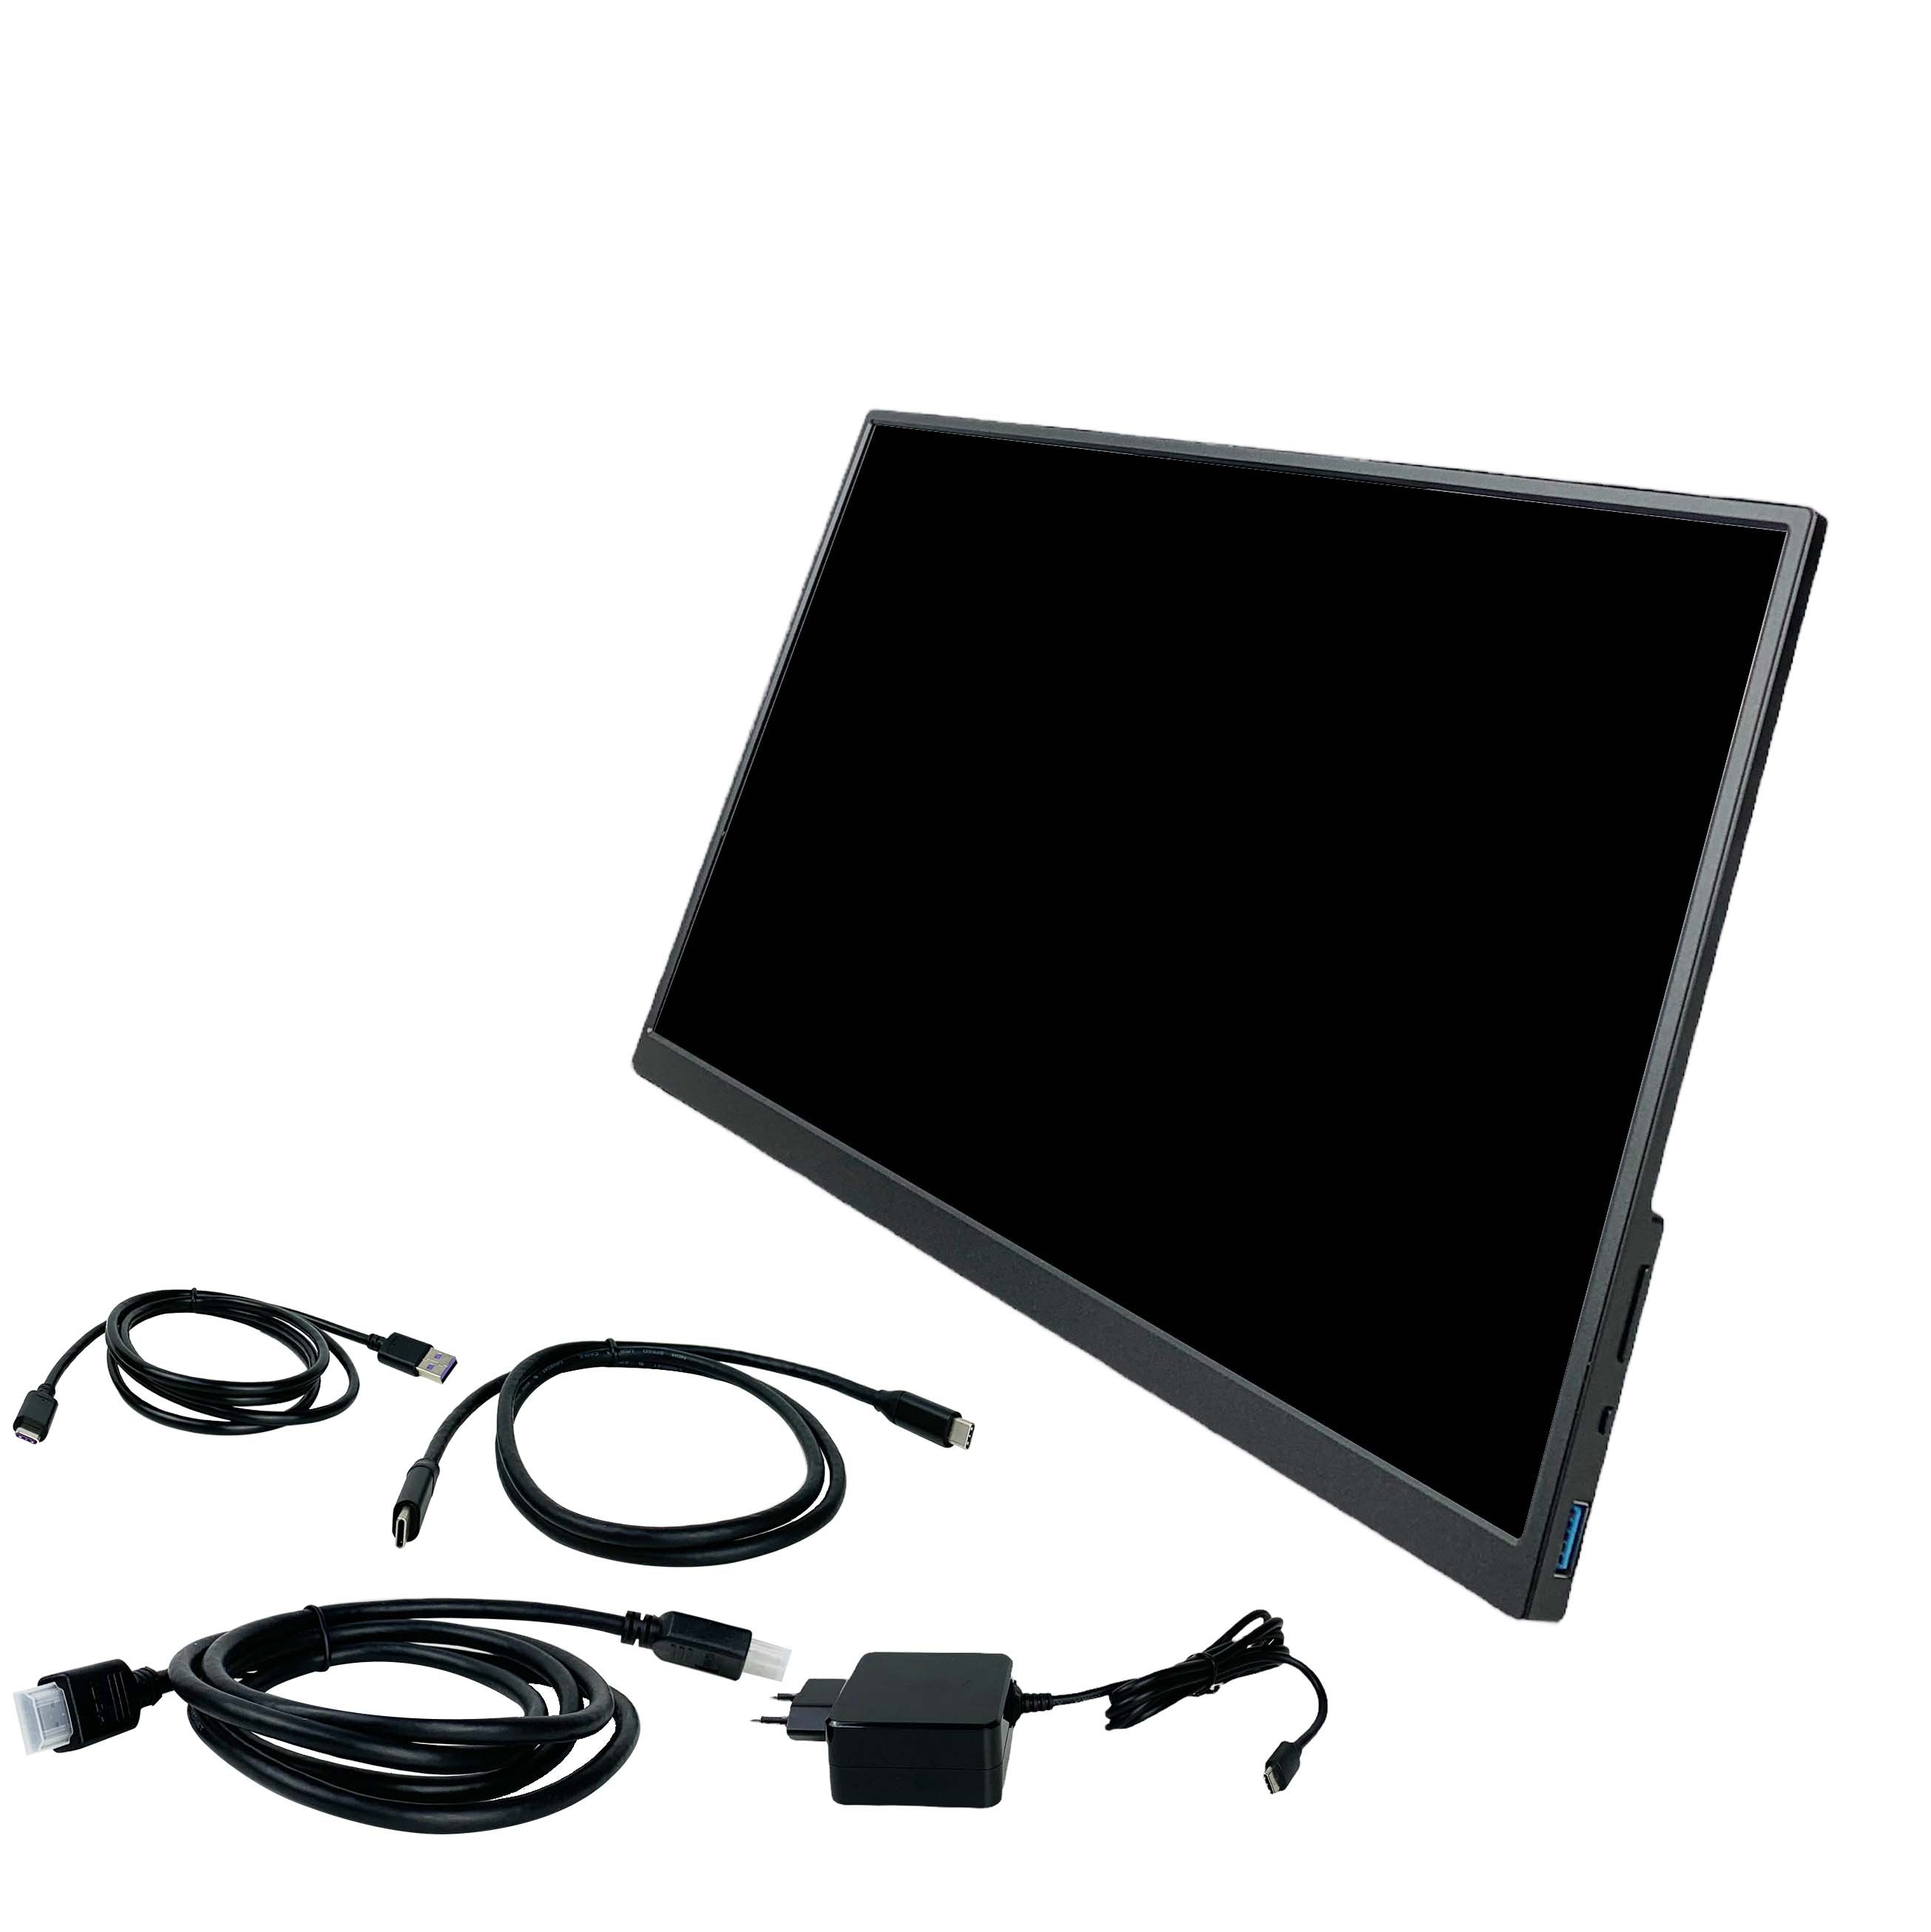 Pantalla LCD LCD-4K1560 4K 15.6 pulgadas con HDMI, USB, puerto tipo C